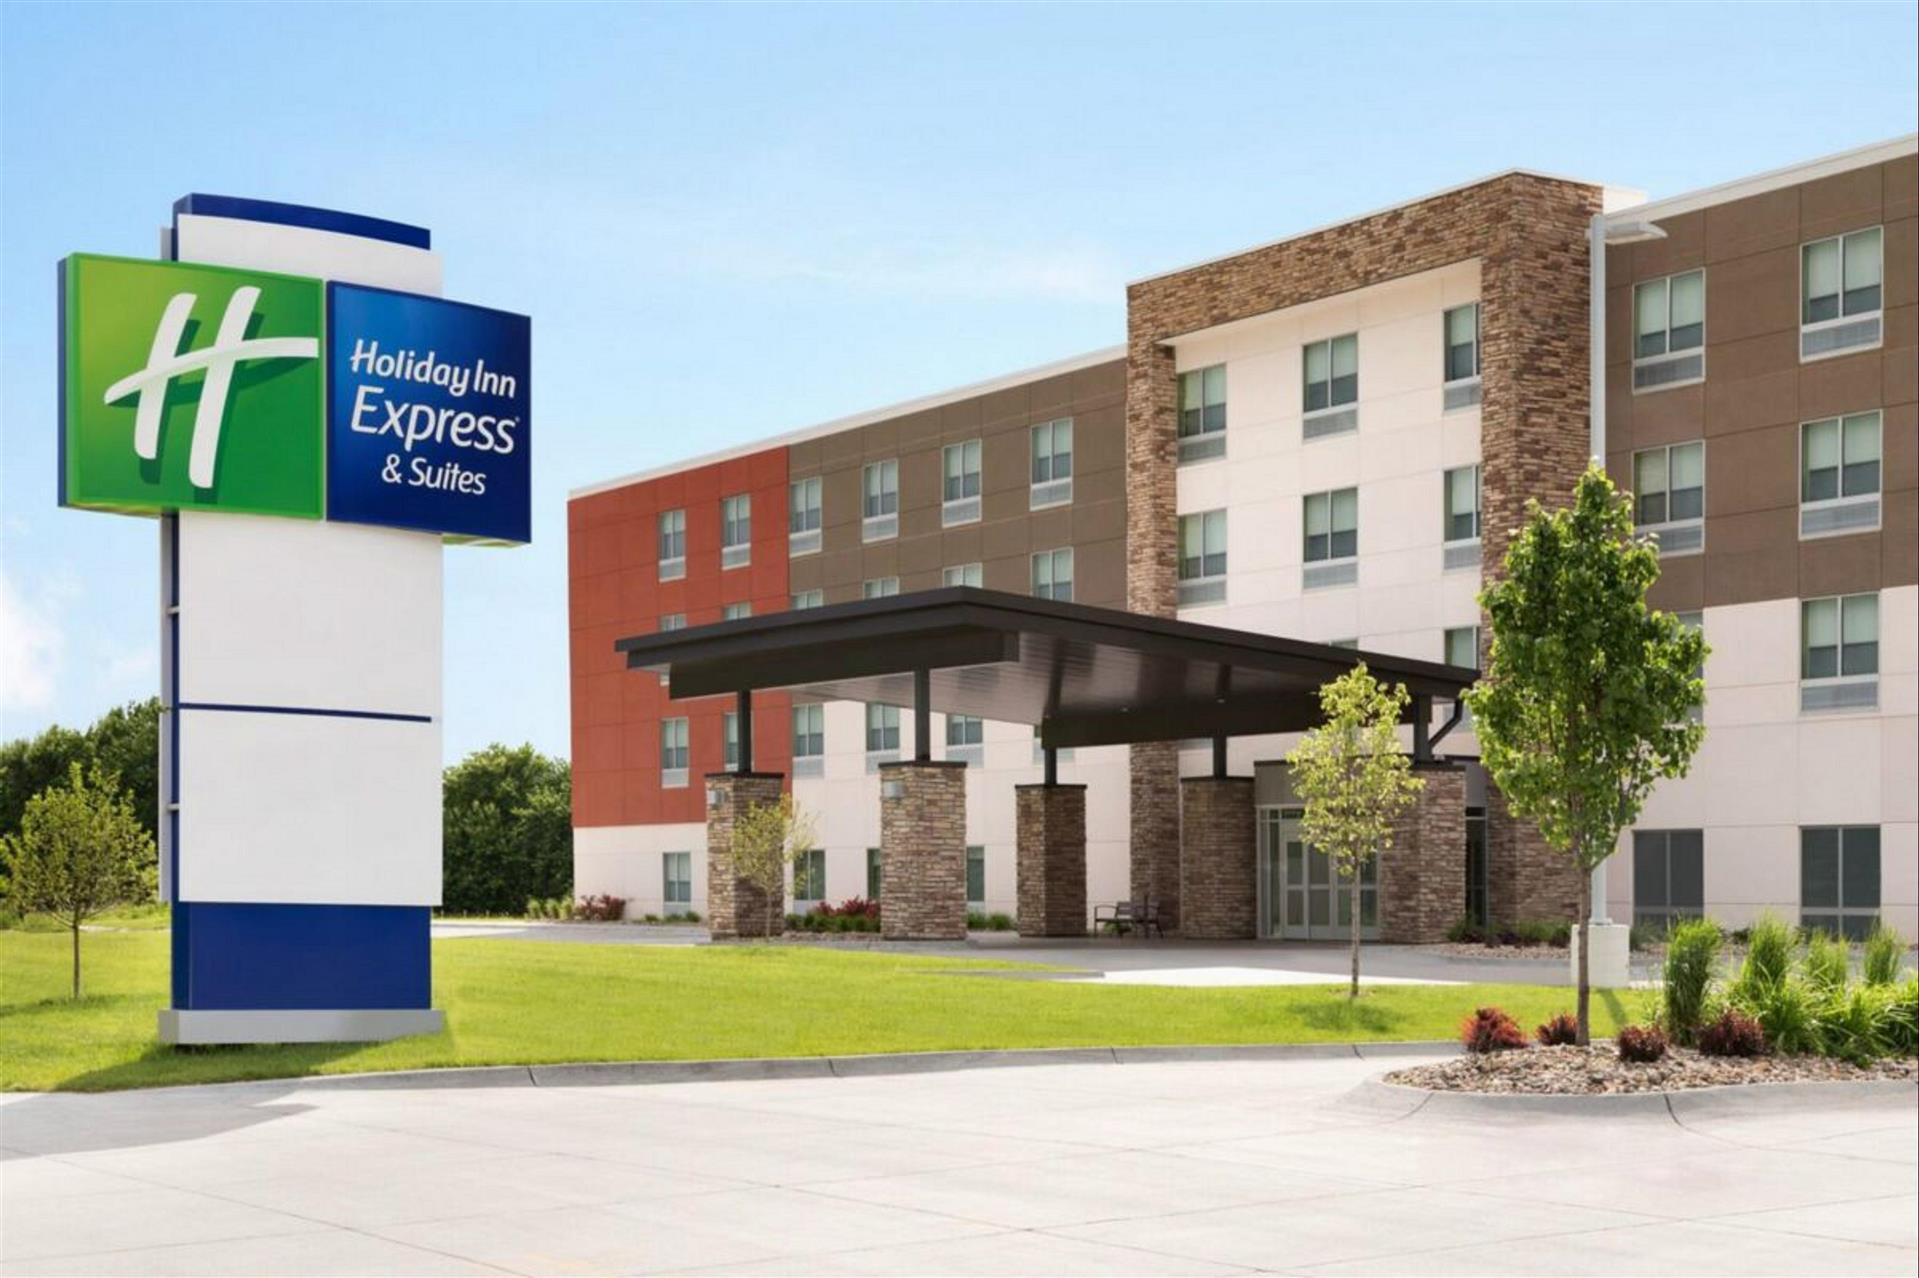 Holiday Inn Express & Suites Frisco North - Prosper in Prosper, TX